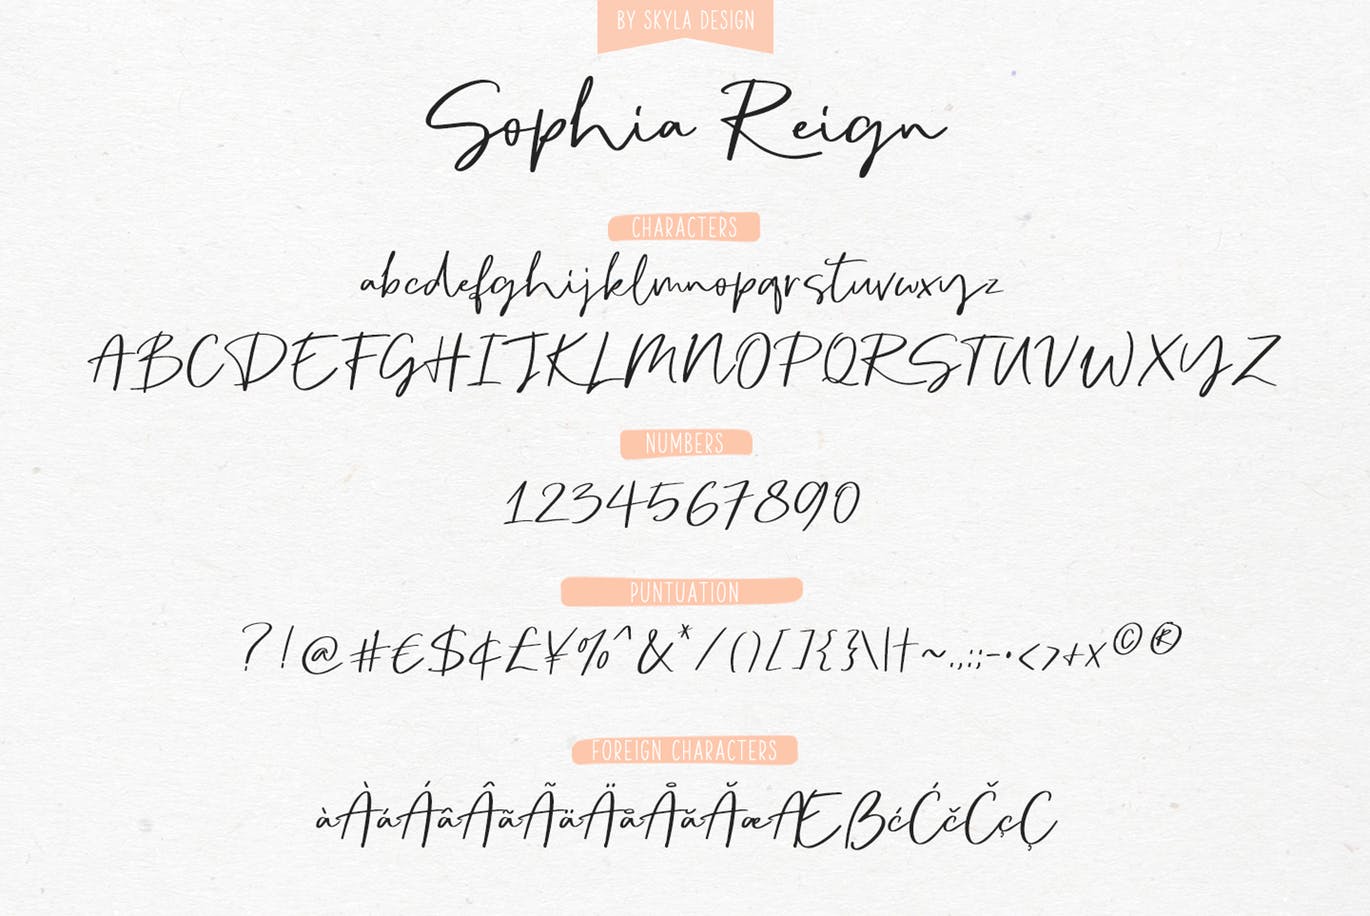 英文钢笔签名字体16设计素材网精选&大写字母正楷字体16设计素材网精选二重奏 Sophia Reign signature font duo插图(10)